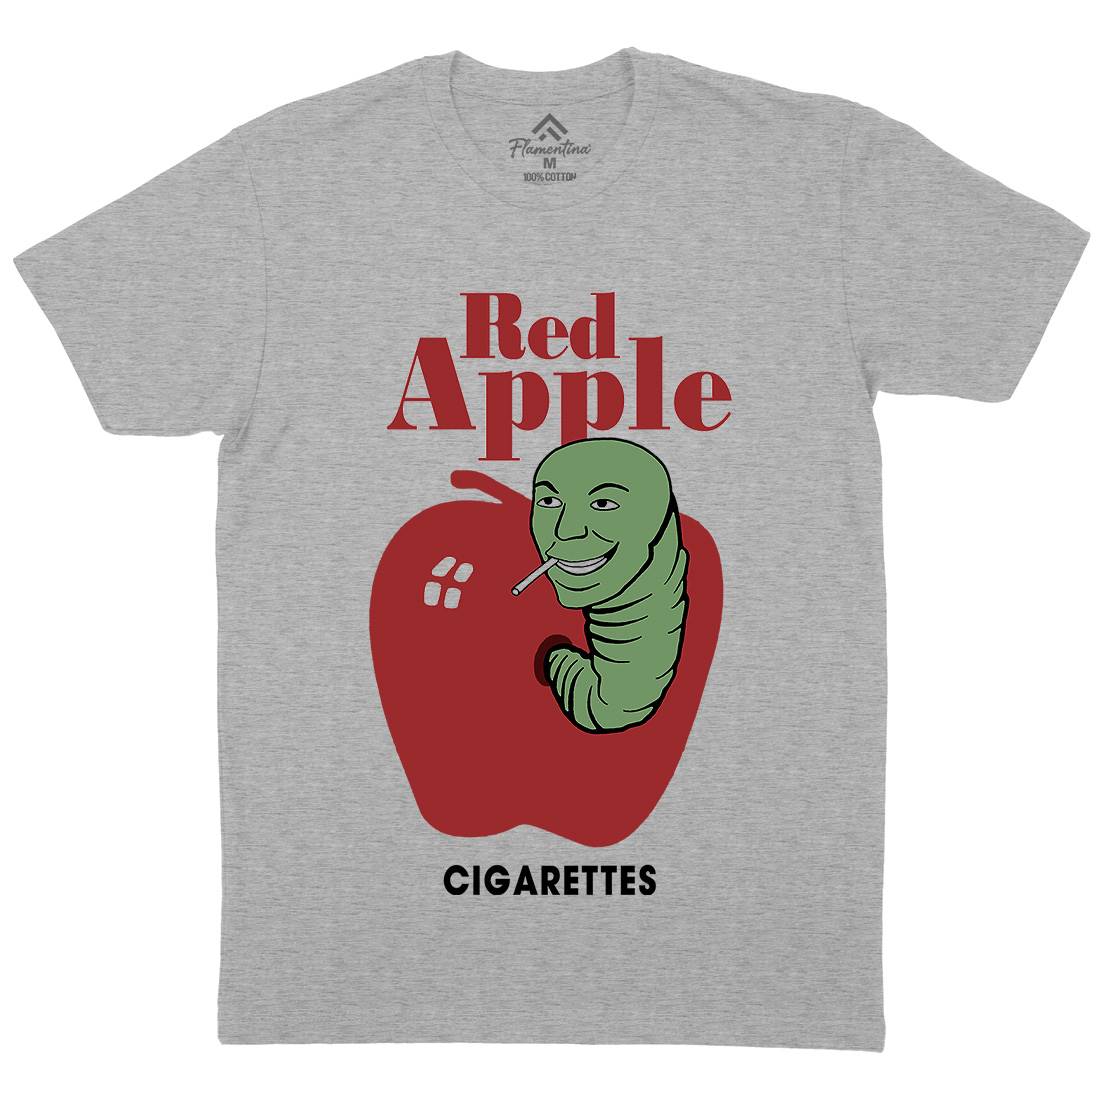 Red Apple Cigarettes Mens Crew Neck T-Shirt Retro D211